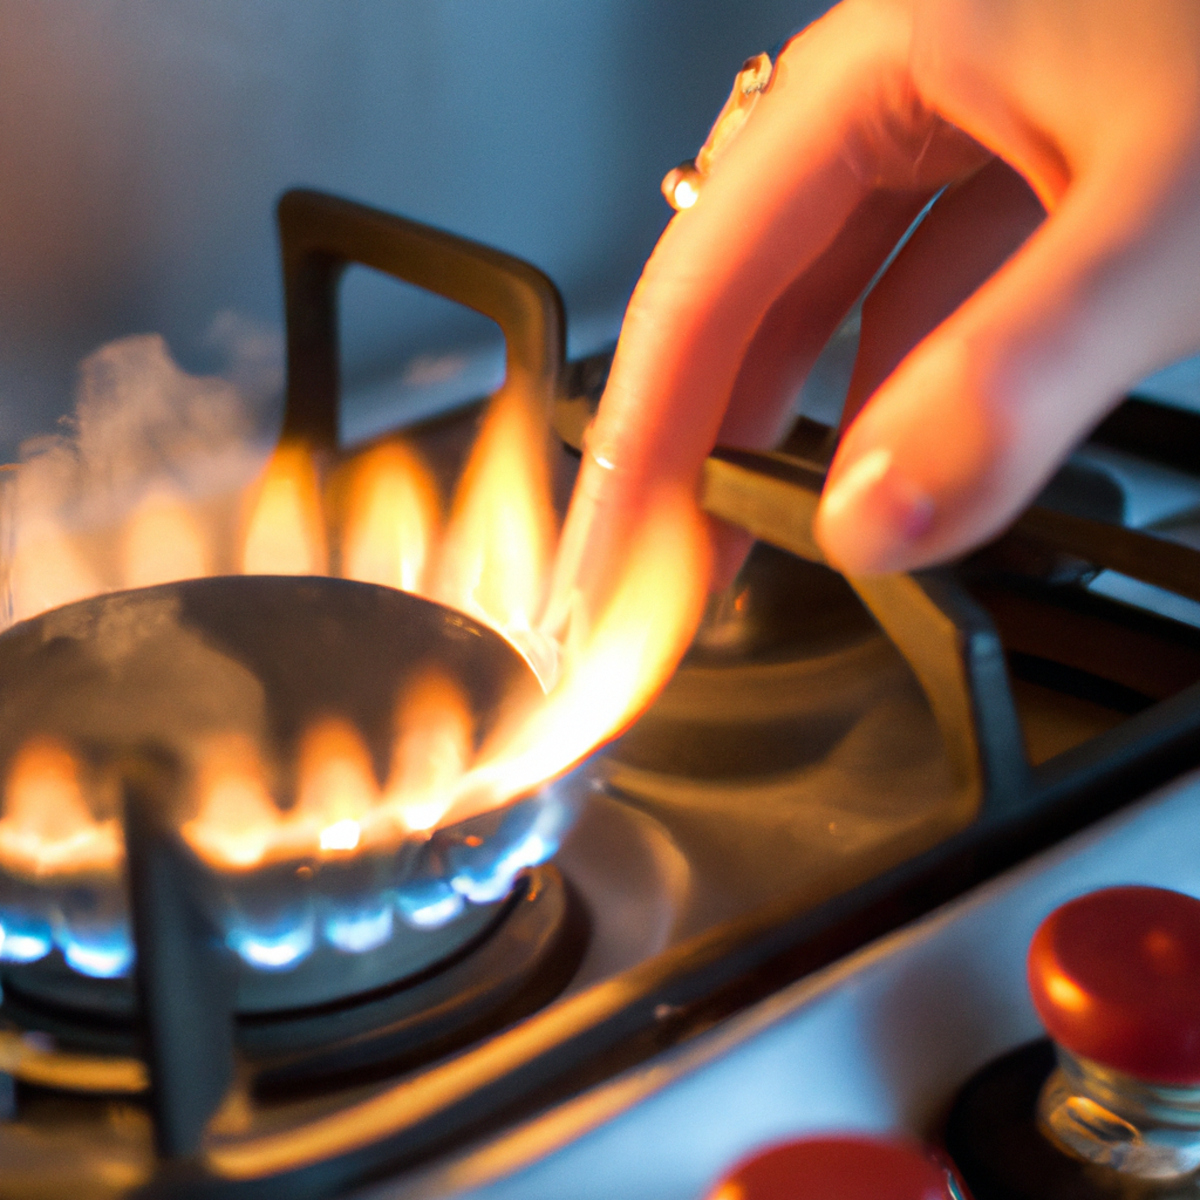 Hand touching hot stove burner, no pain. CIPA's insensitivity to pain shown amidst kitchen hazards -Congenital Insensitivity to Pain with Anhidrosis (CIPA)